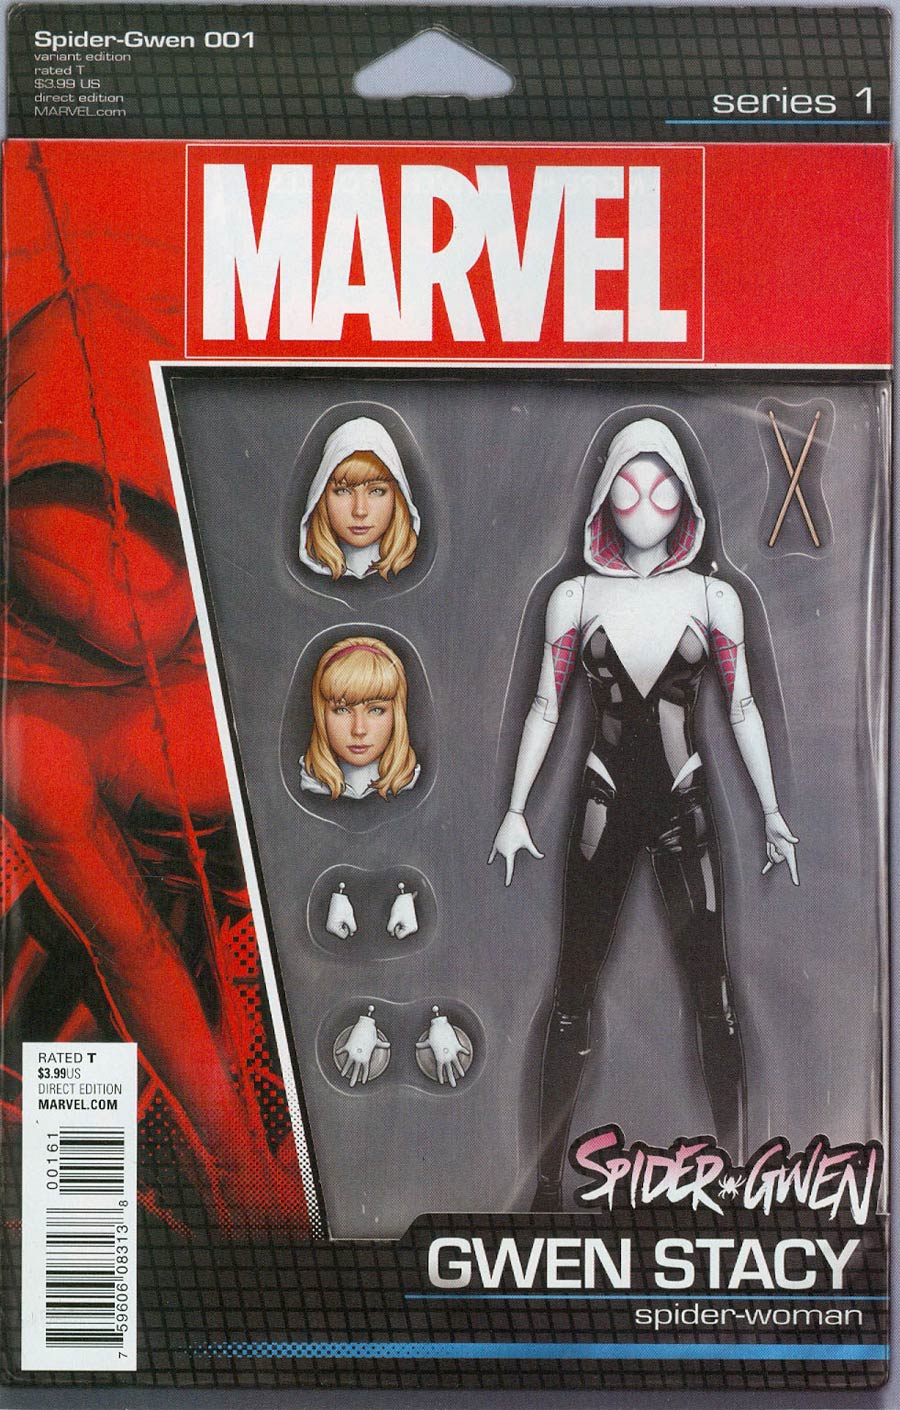 Spider-Gwen Vol 2 #1 Cover D Variant John Tyler Christopher Action Figure Cover